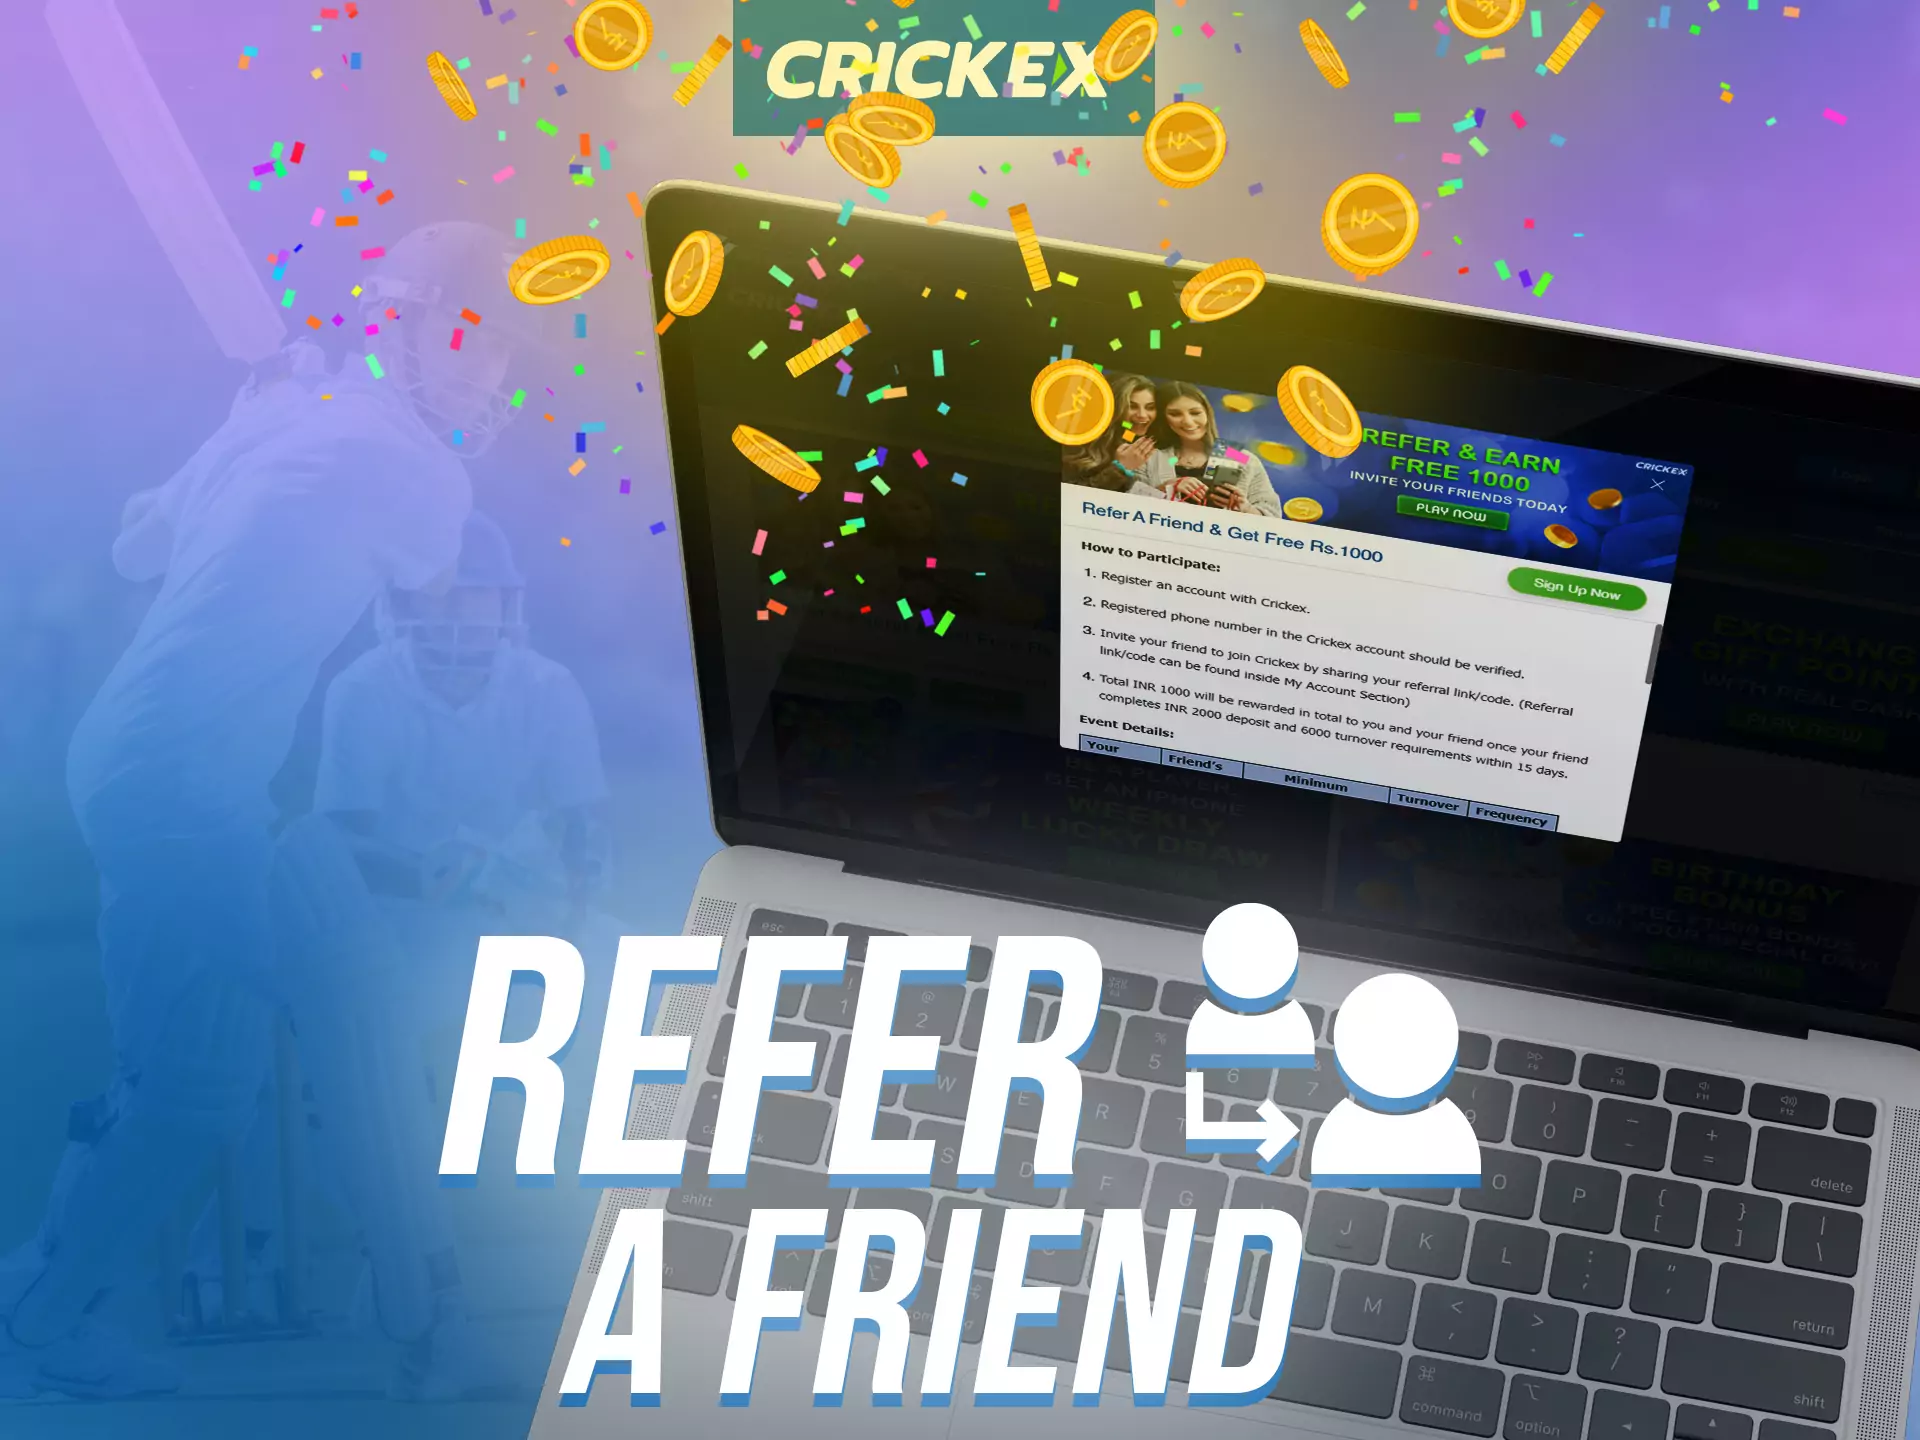 At Crickex you can get a bonus if you invite a friend.